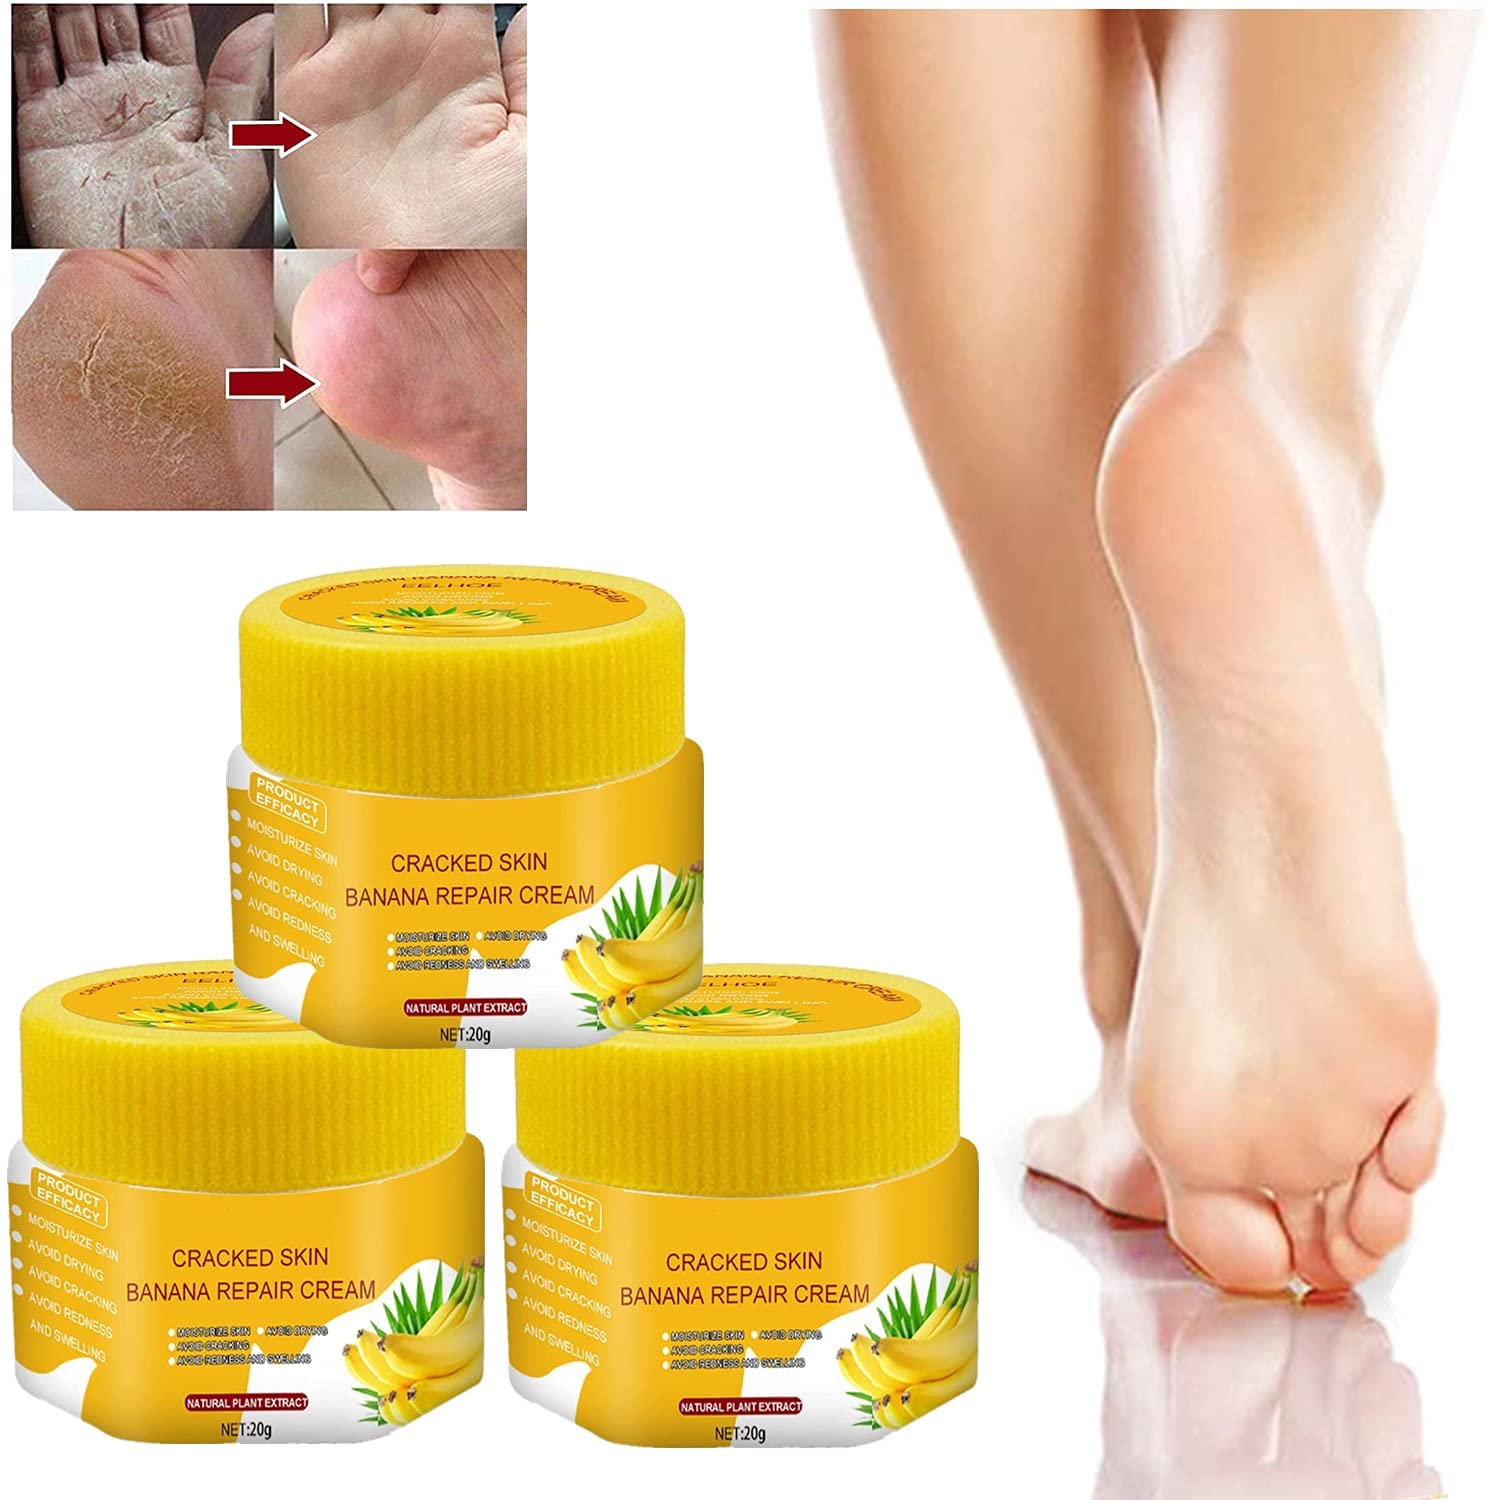 Xikangshun Heel Banana Oil Repair Cream, Banana Essence Hand and Foot Cream, Cracked Skin Banana Repair Cream, Foot Cream, Dead Skin Remover for Feet, Moisturises and Makes the Skin (3pcs), pieces.